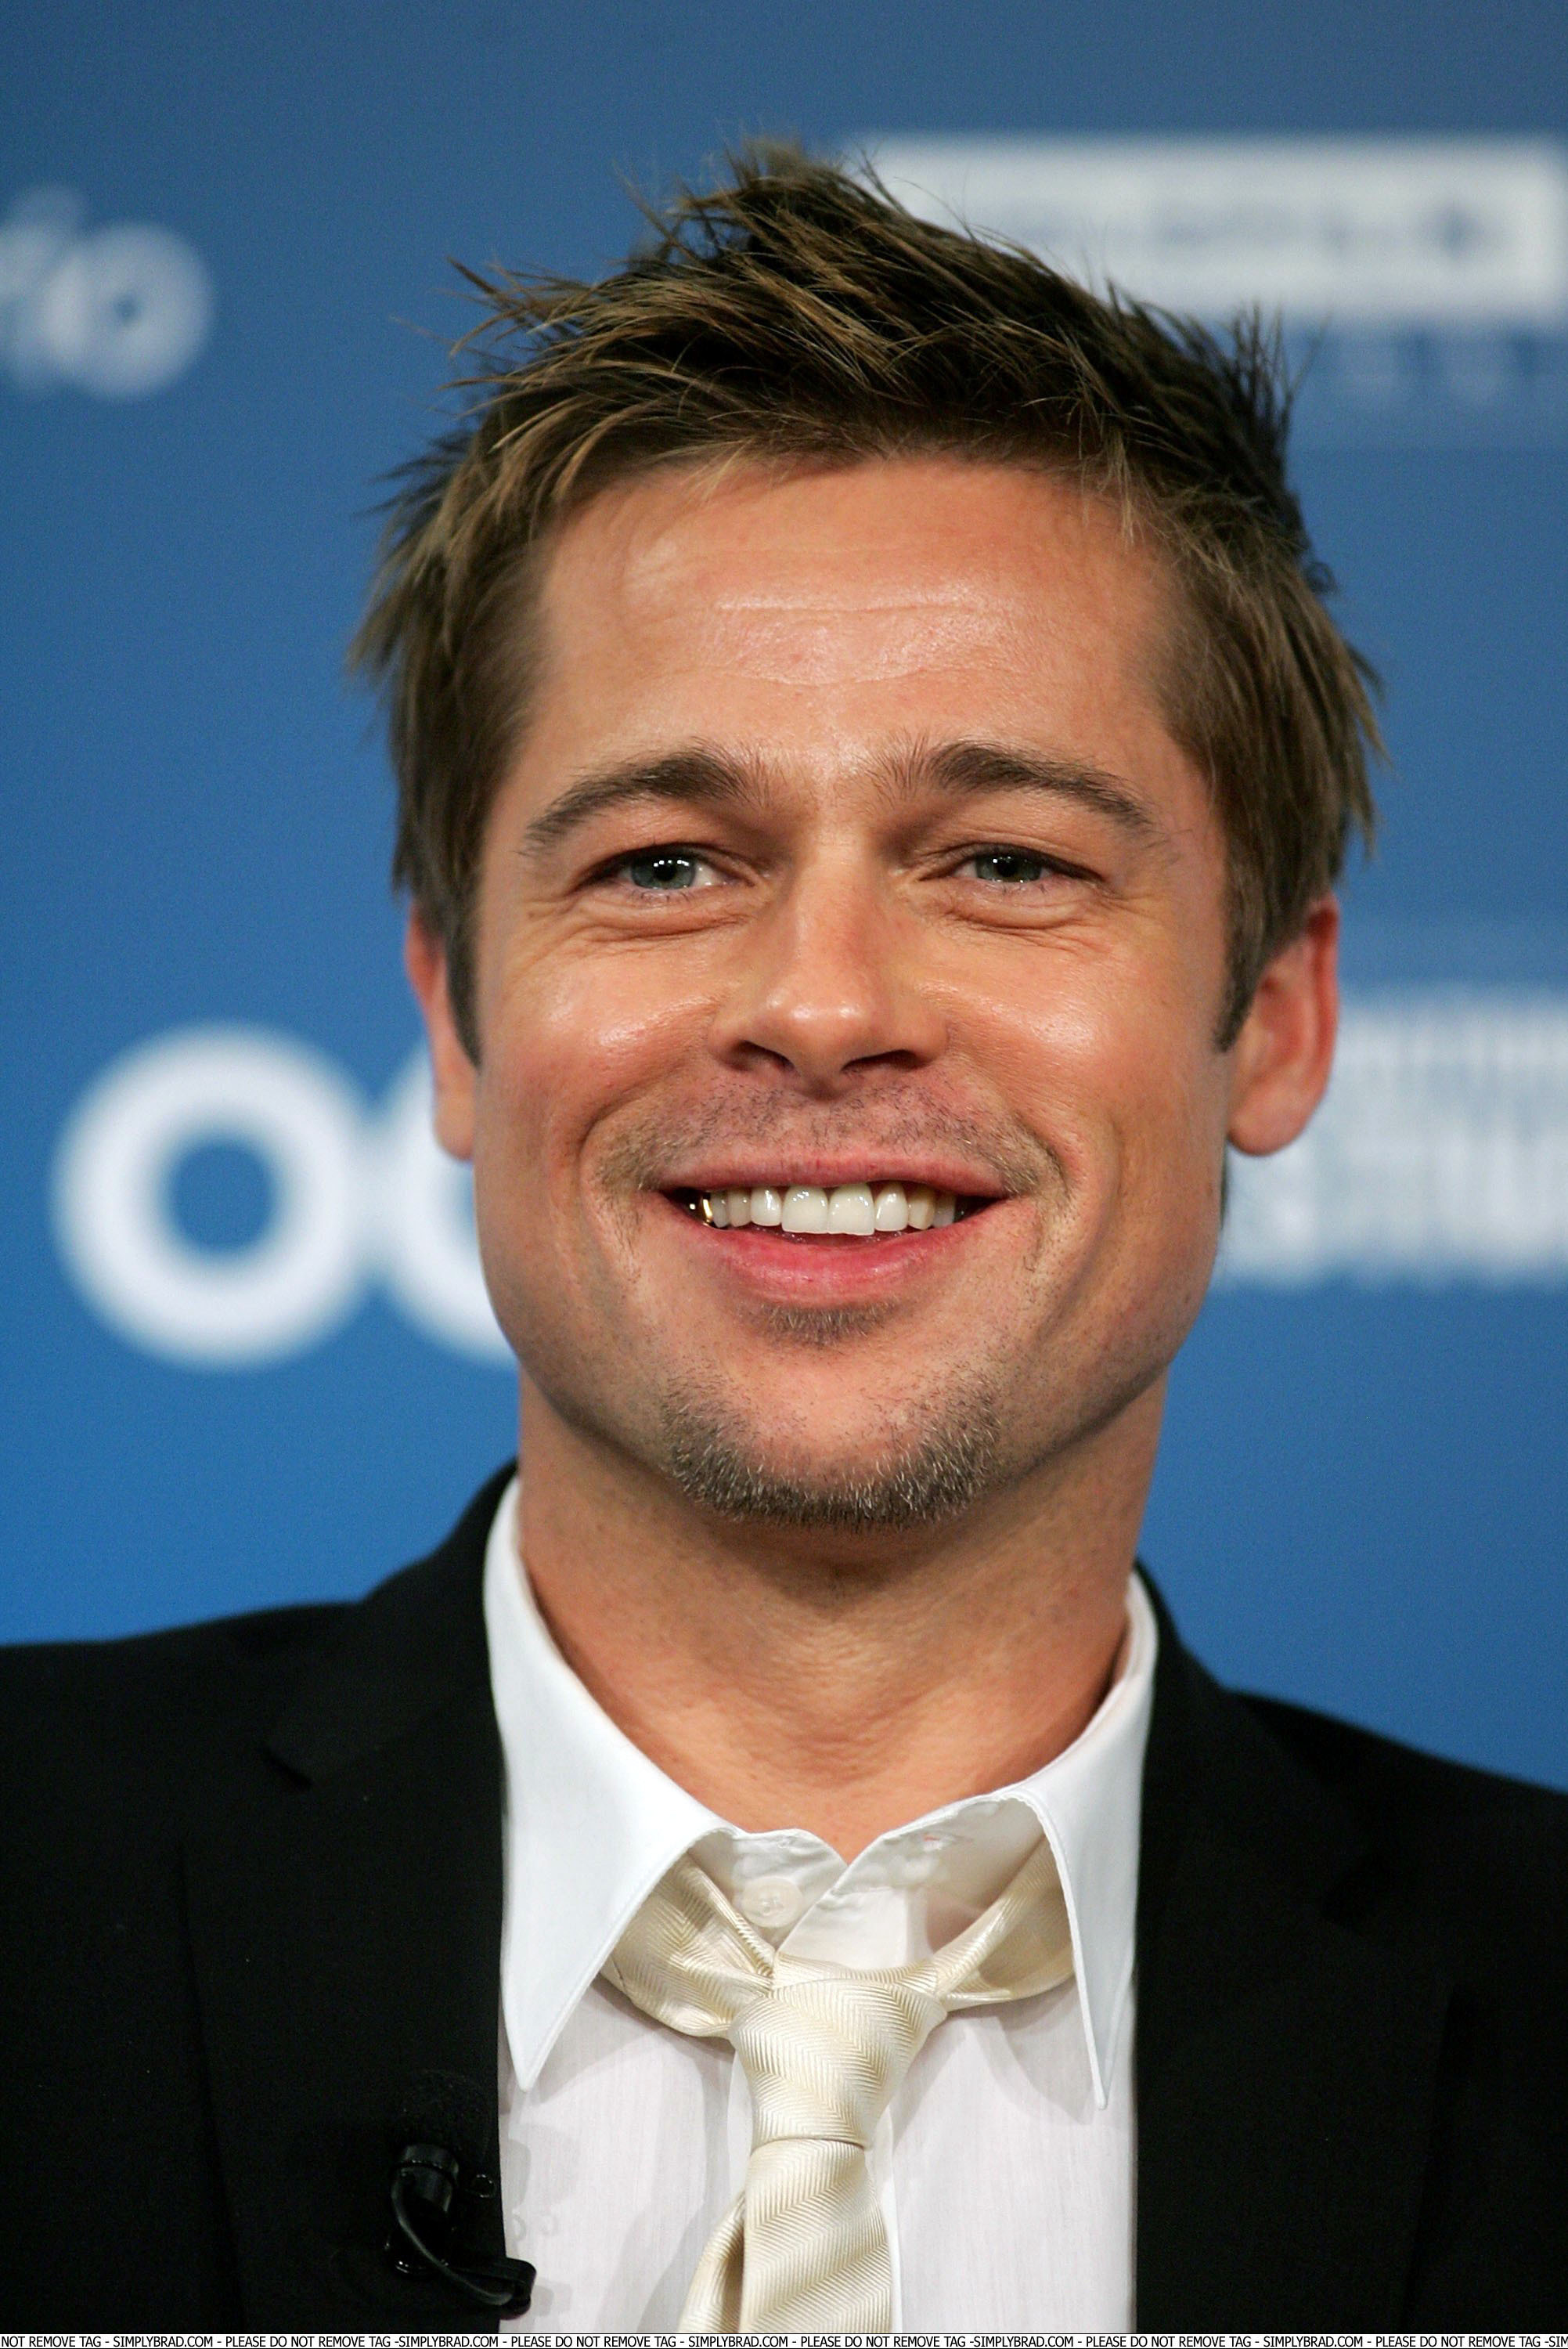 Does the age make Brad less hot? - Brad Pitt - Fanpop2003 x 3000